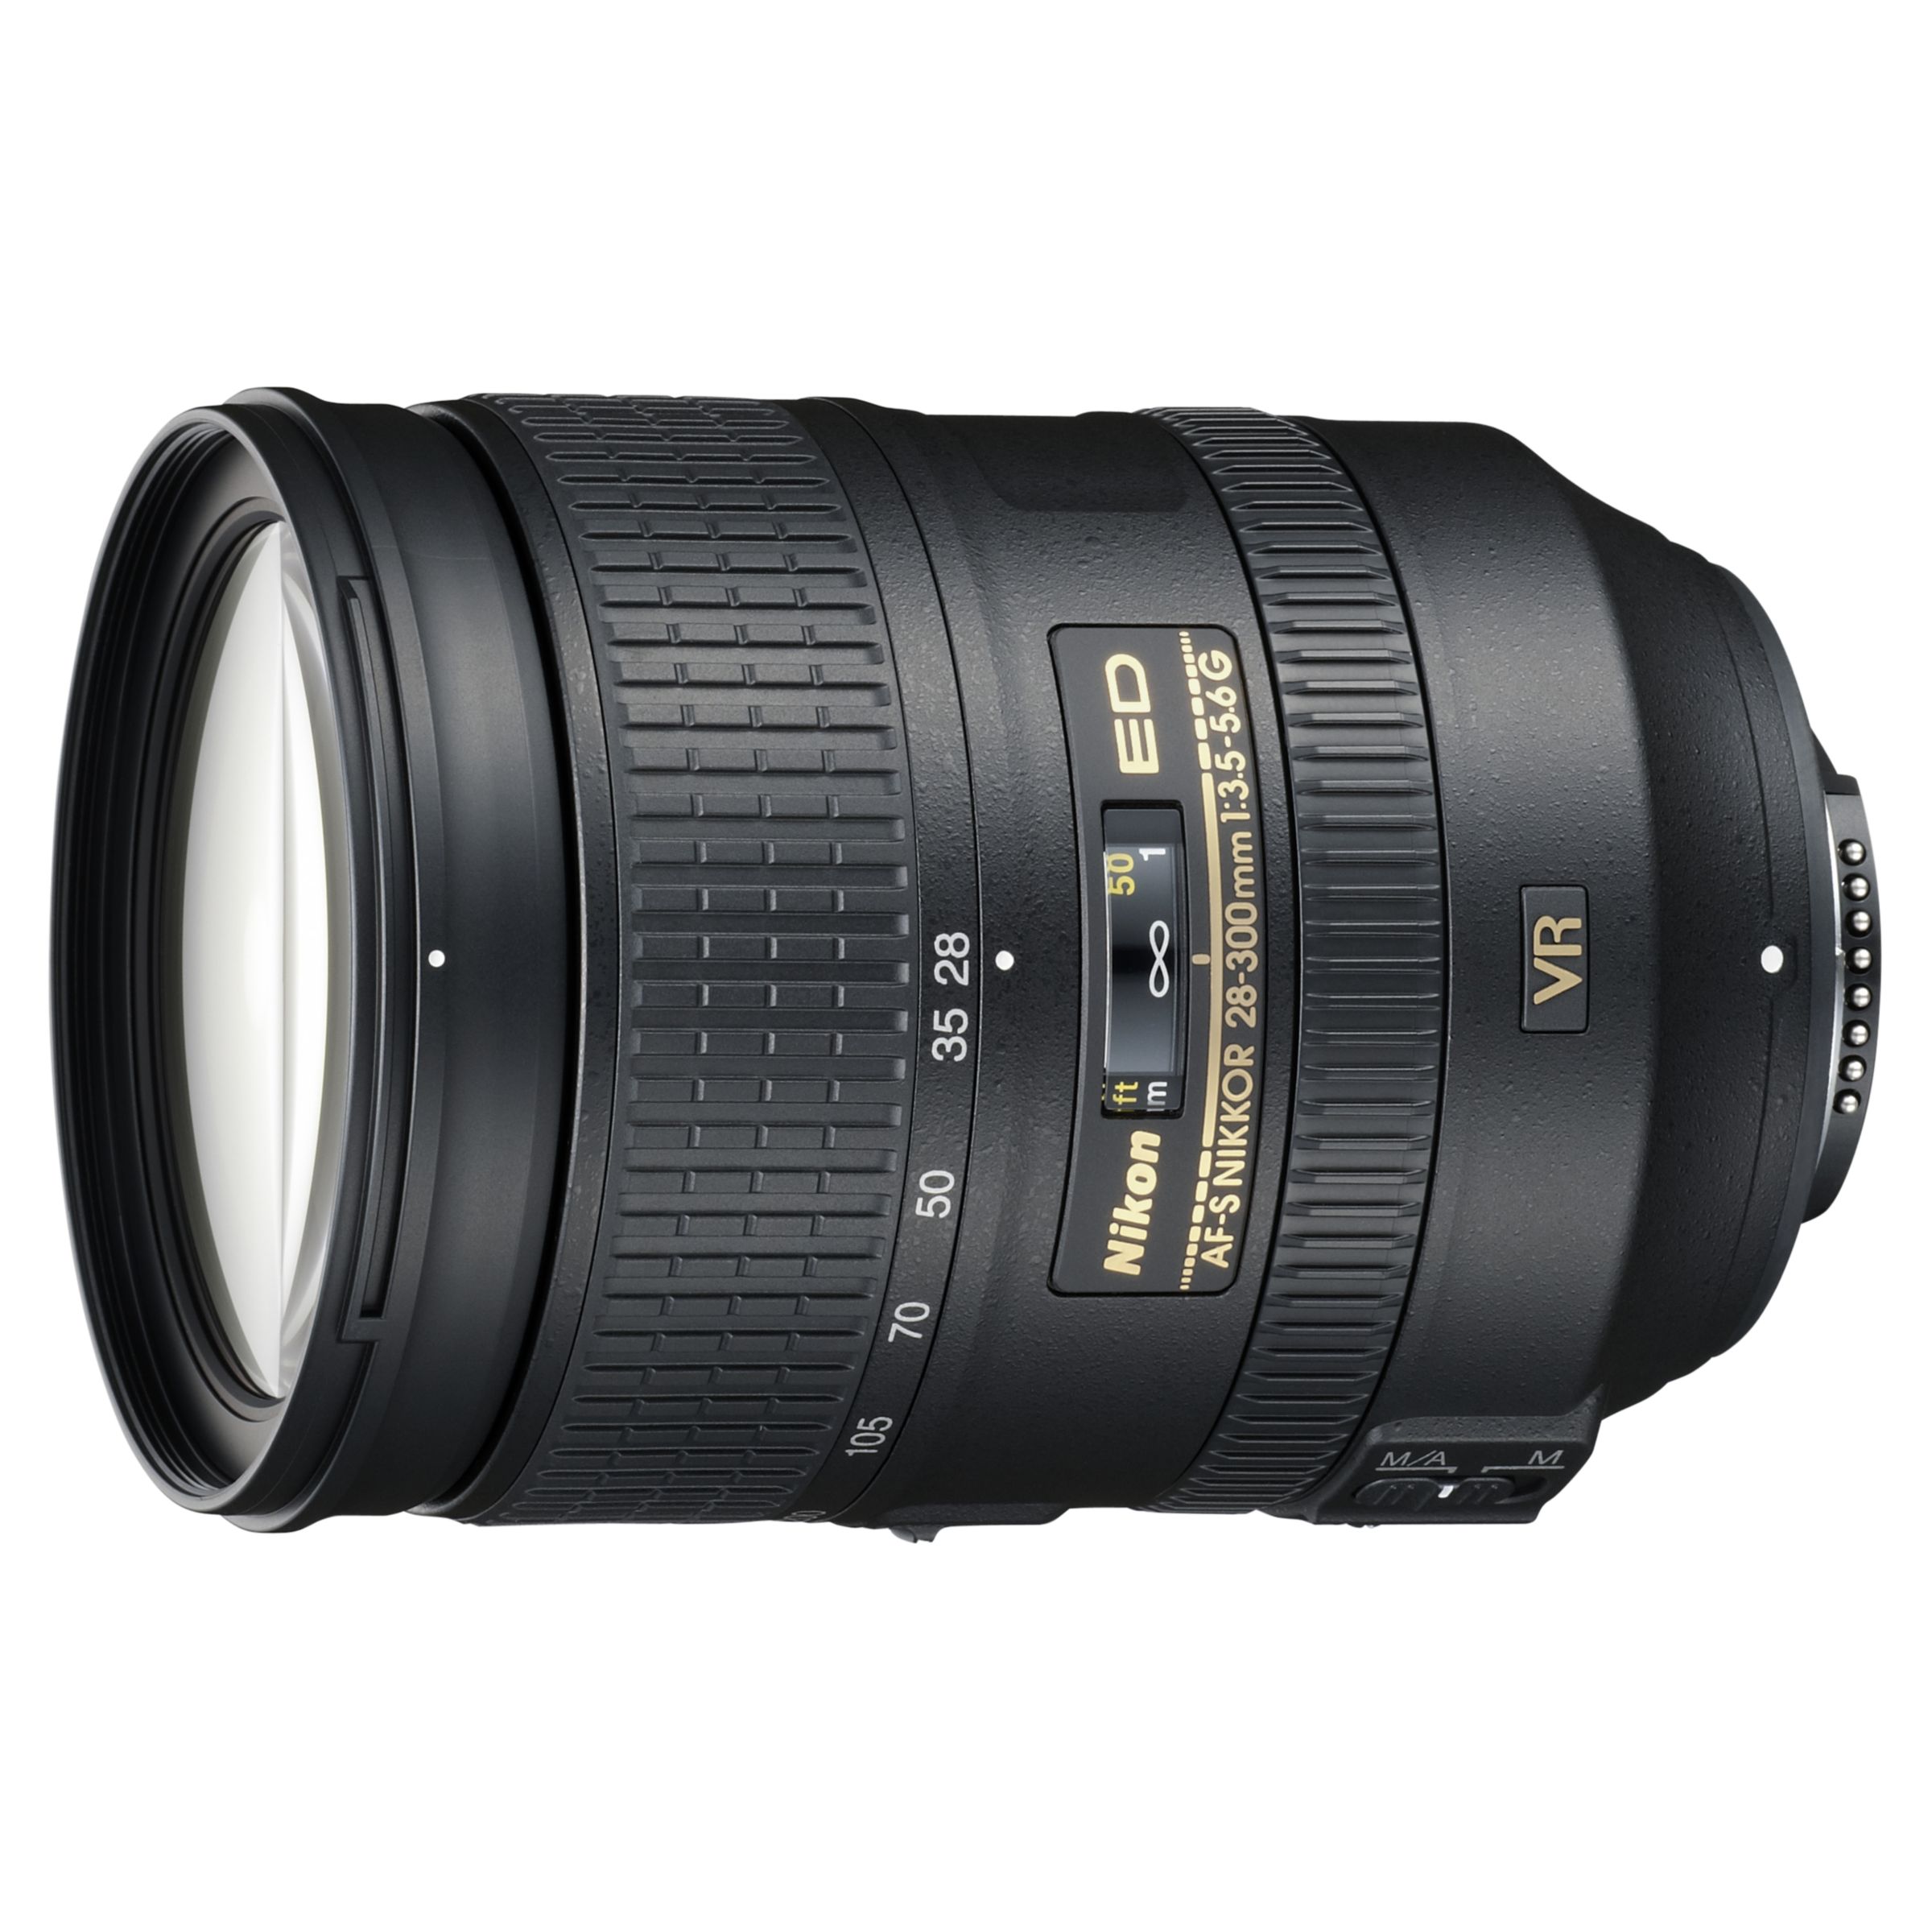 Image of Nikon 28300mm f3556G VR AFS Telephoto Lens